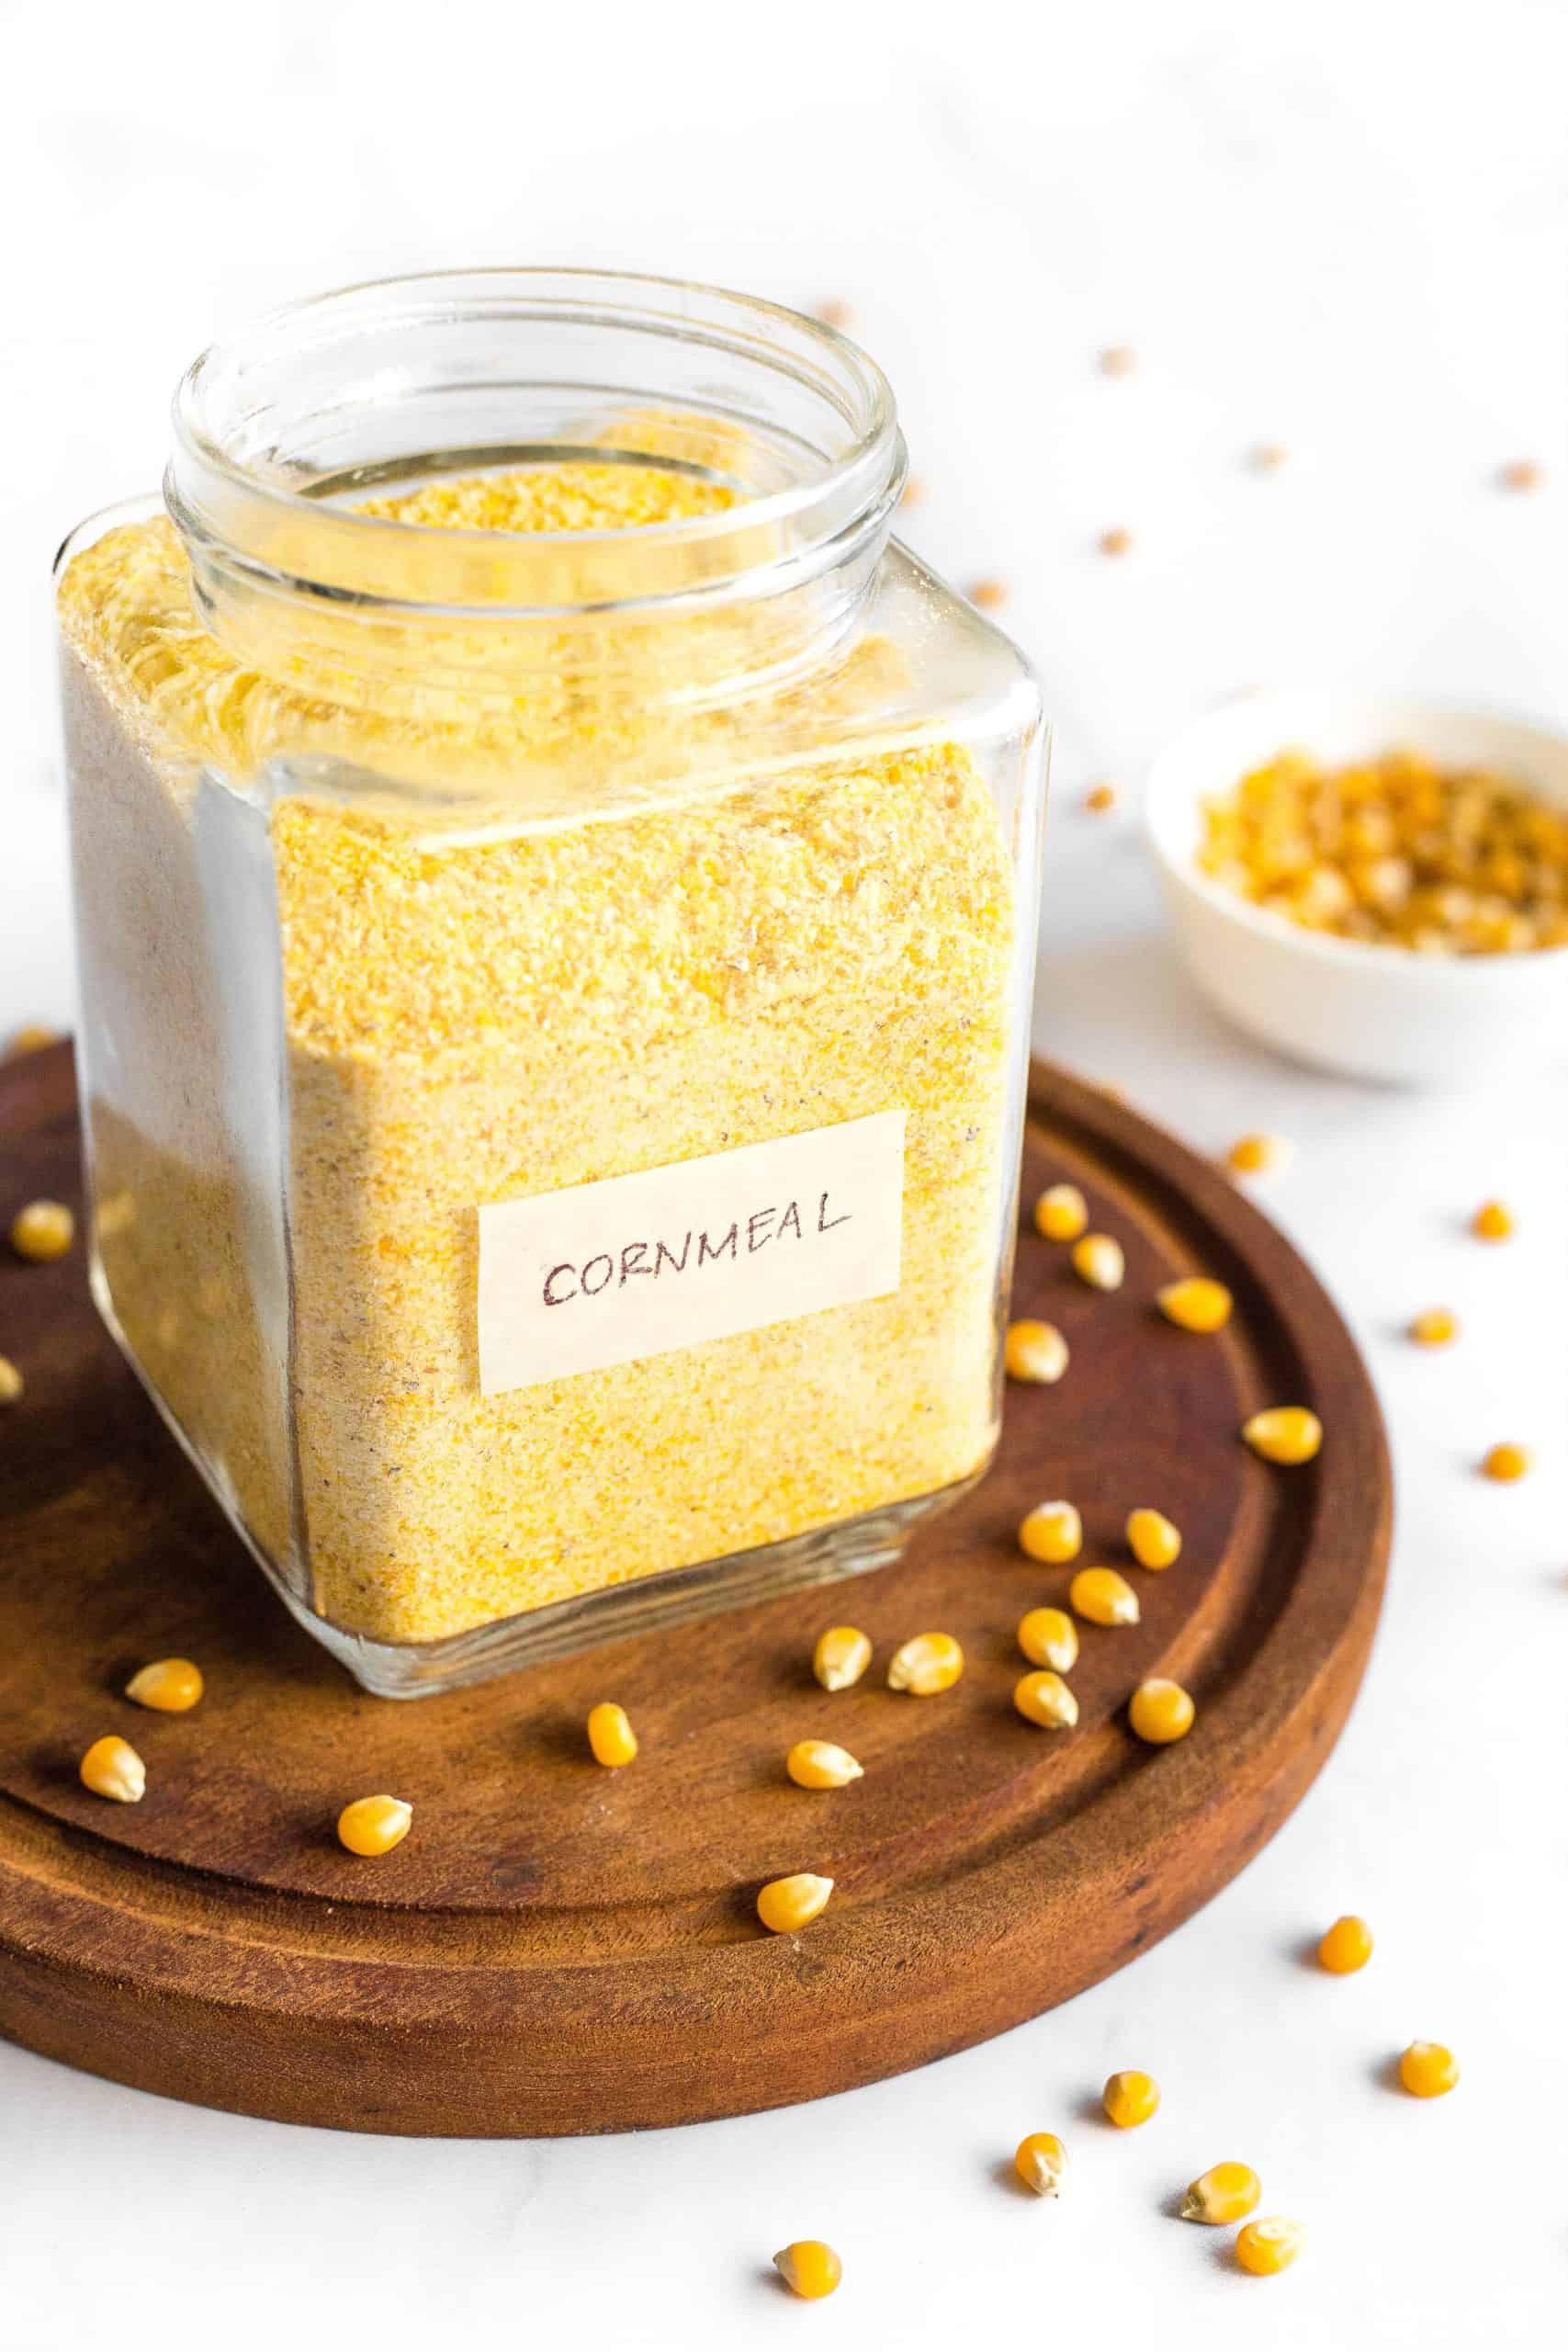 Homemade yellow cornmeal in a glass jar.